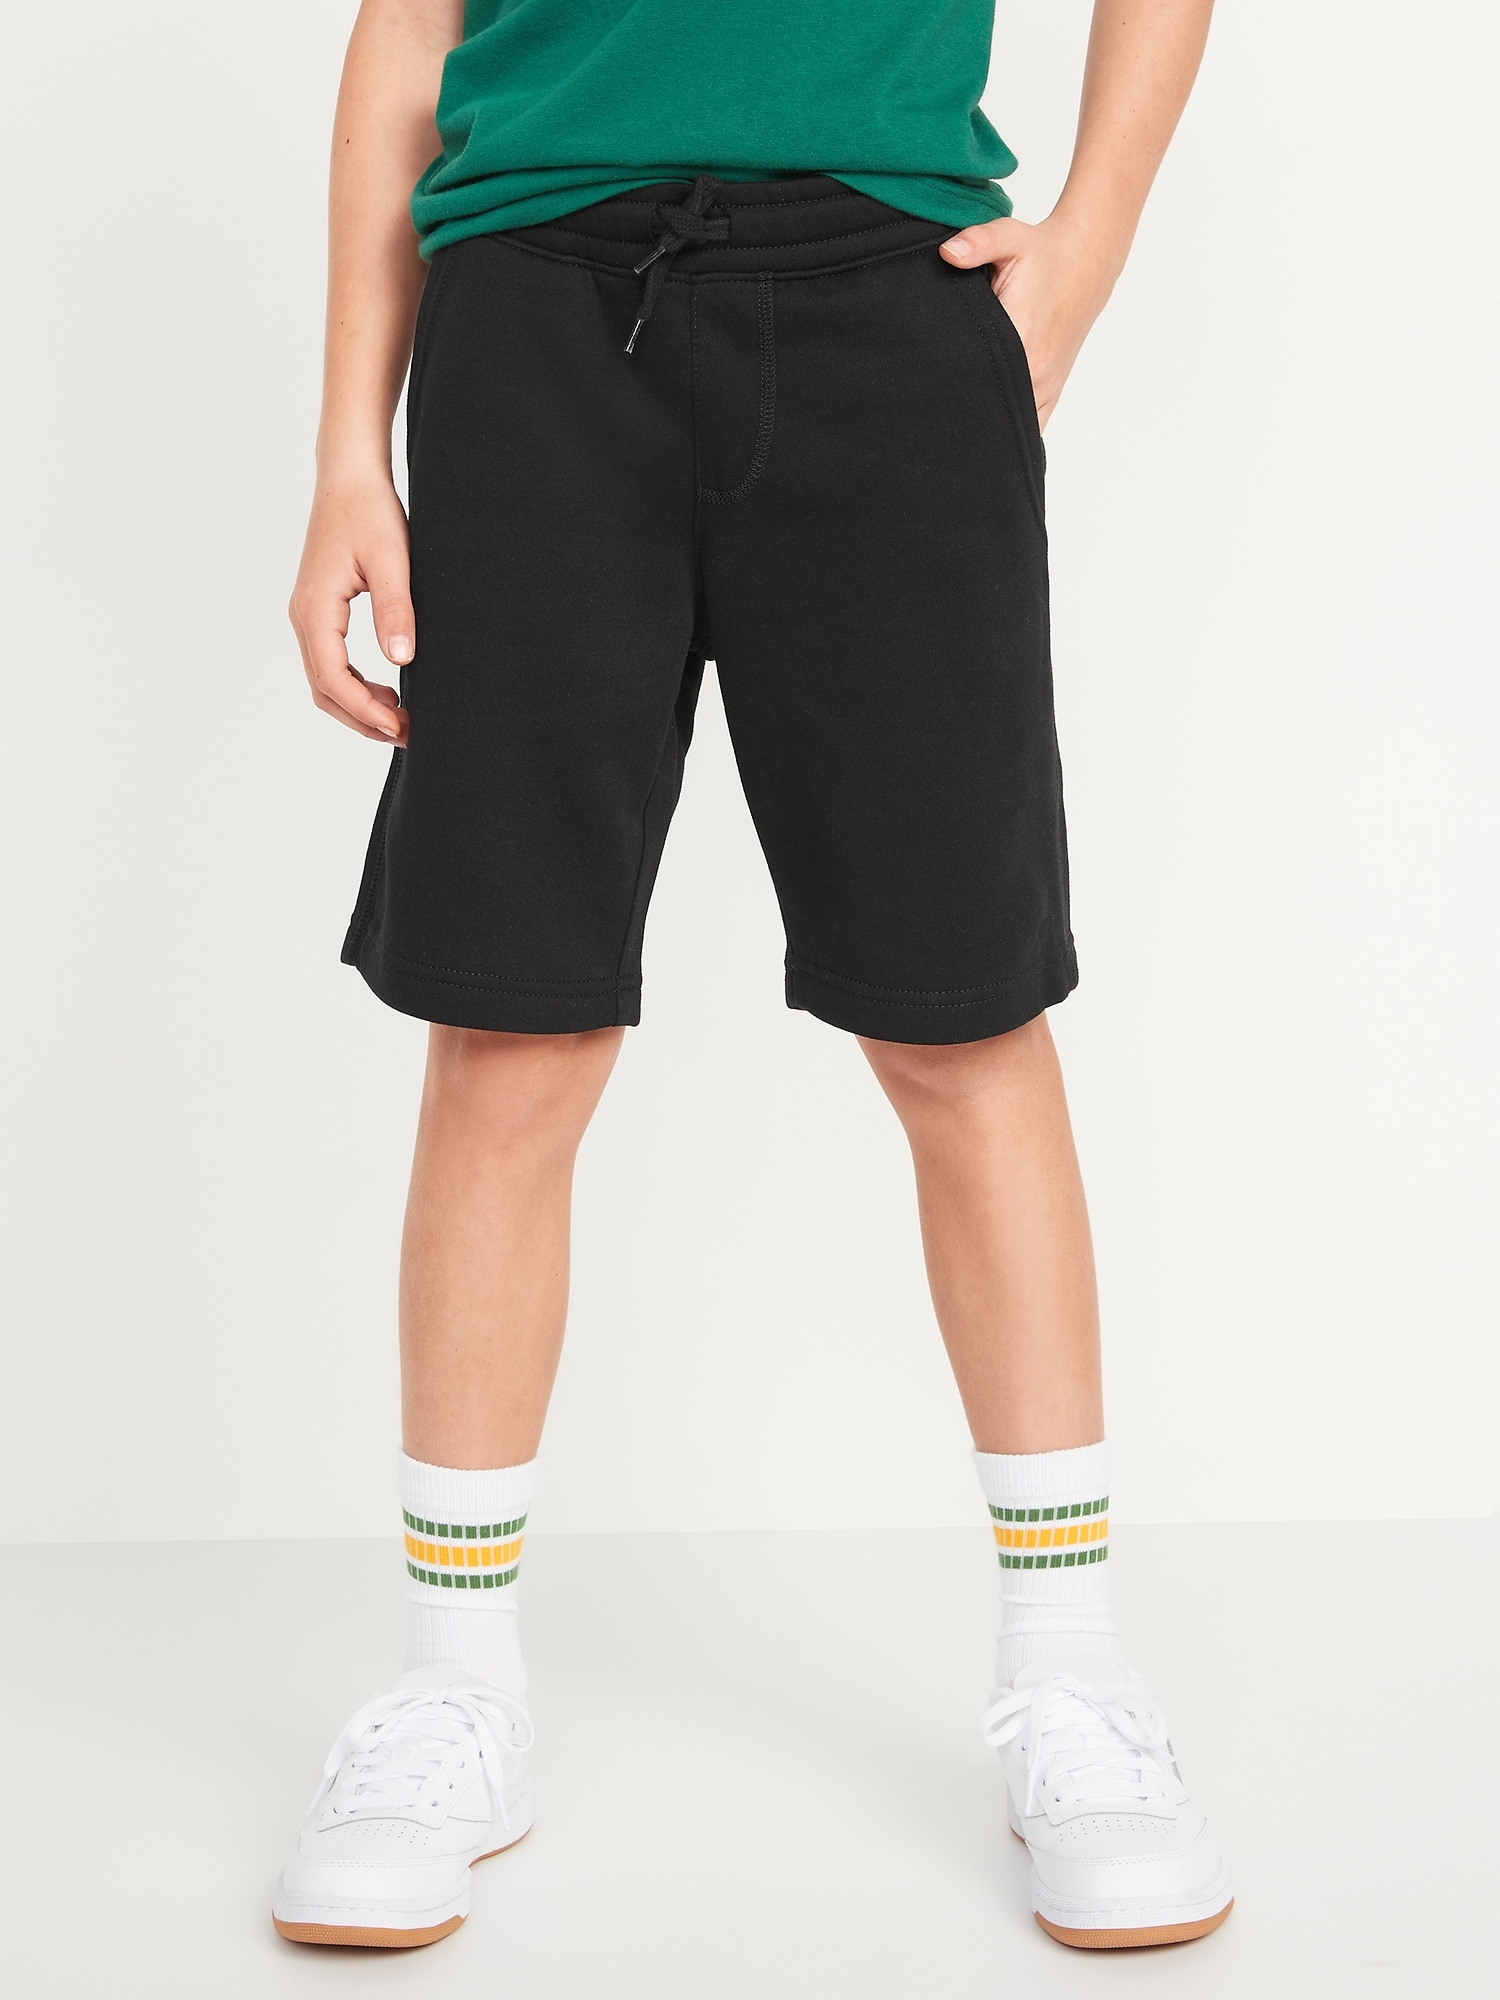 Fleece Jogger Shorts for Boys (At Knee)